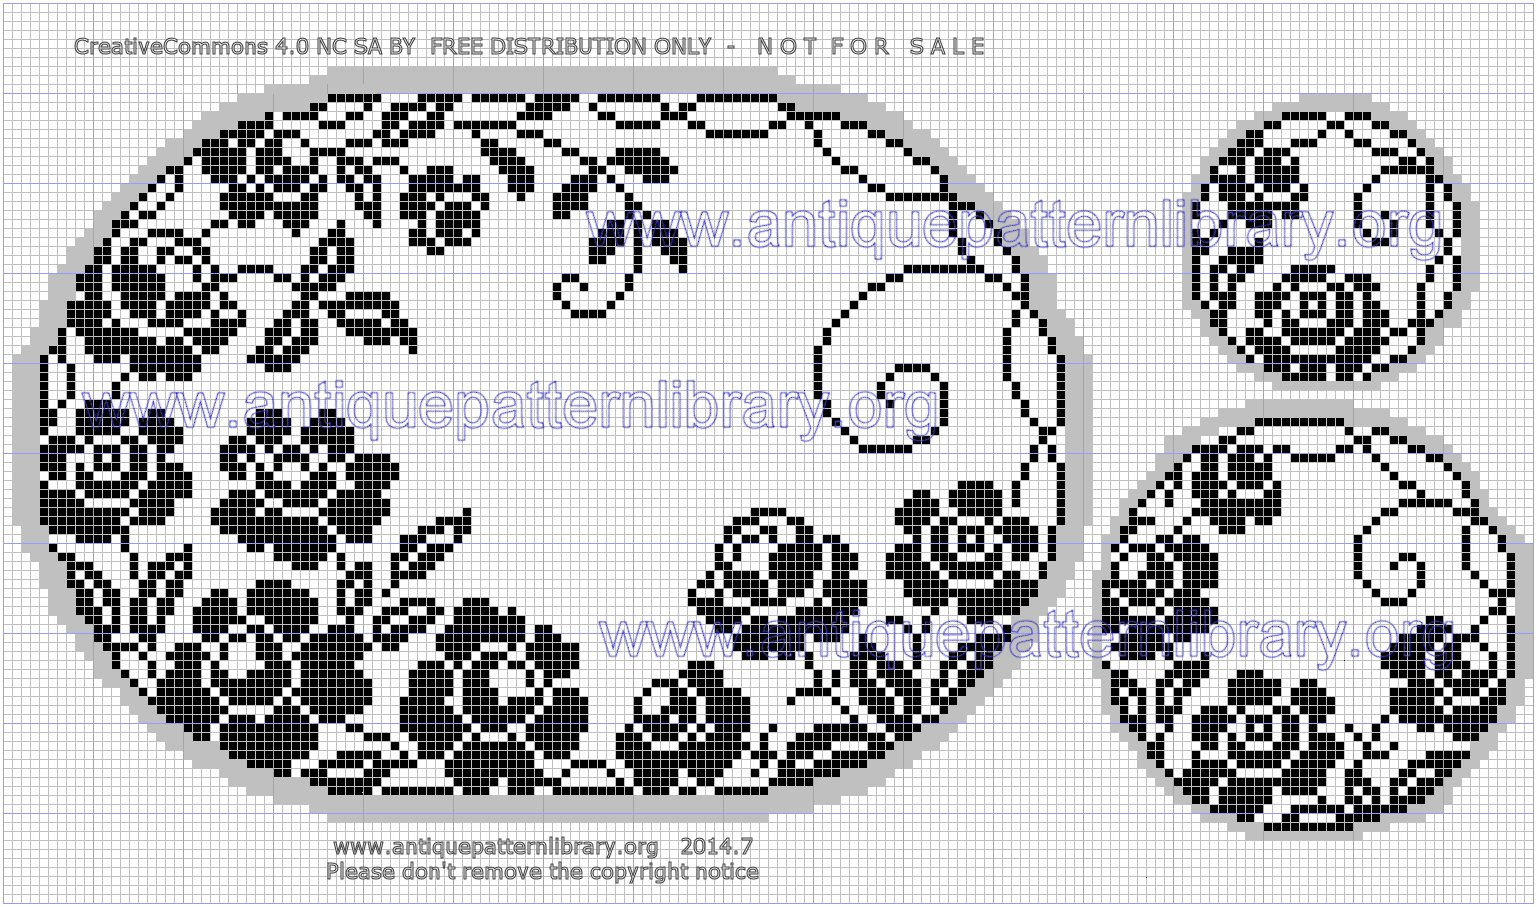 6-TA011 Lily Crochet Design Book No. 71 Roses in Crochet